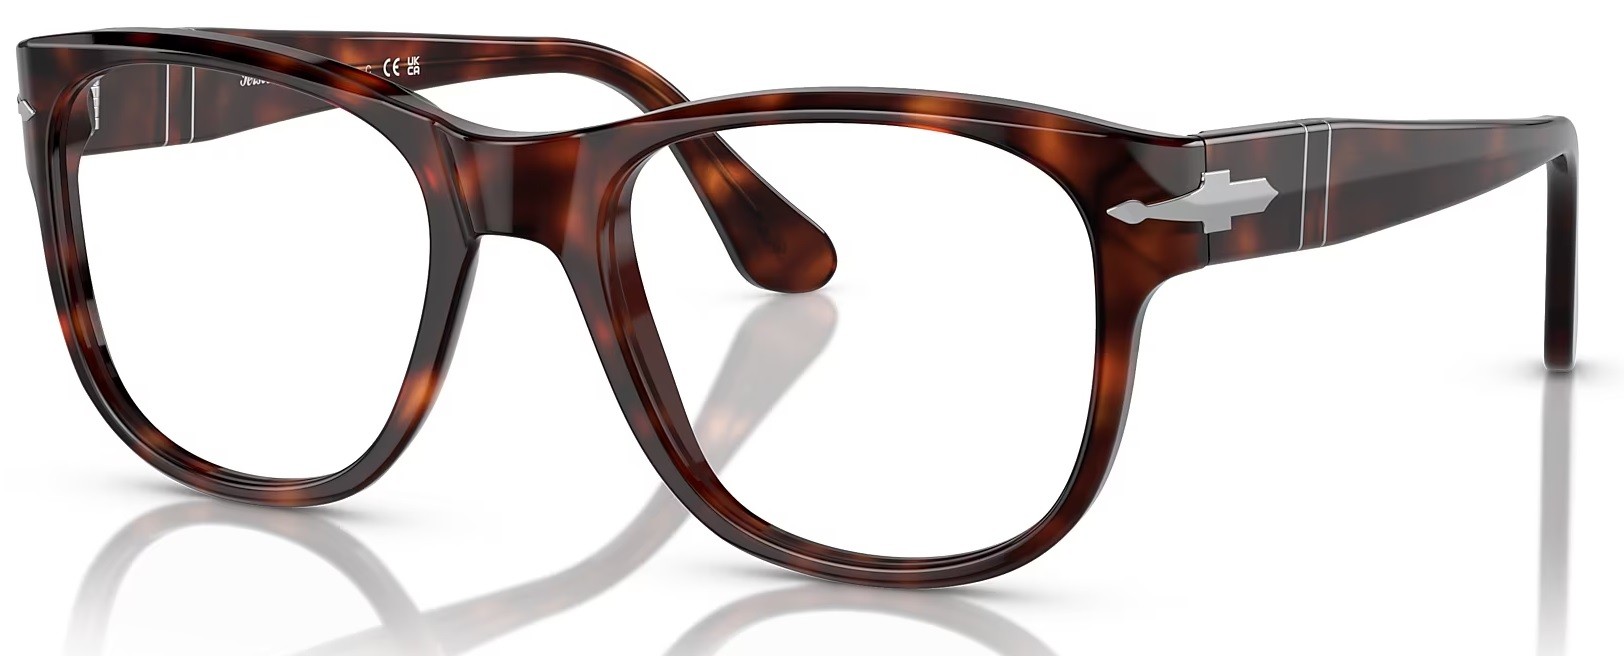 Persol 3312V 24 - Oculos de Grau